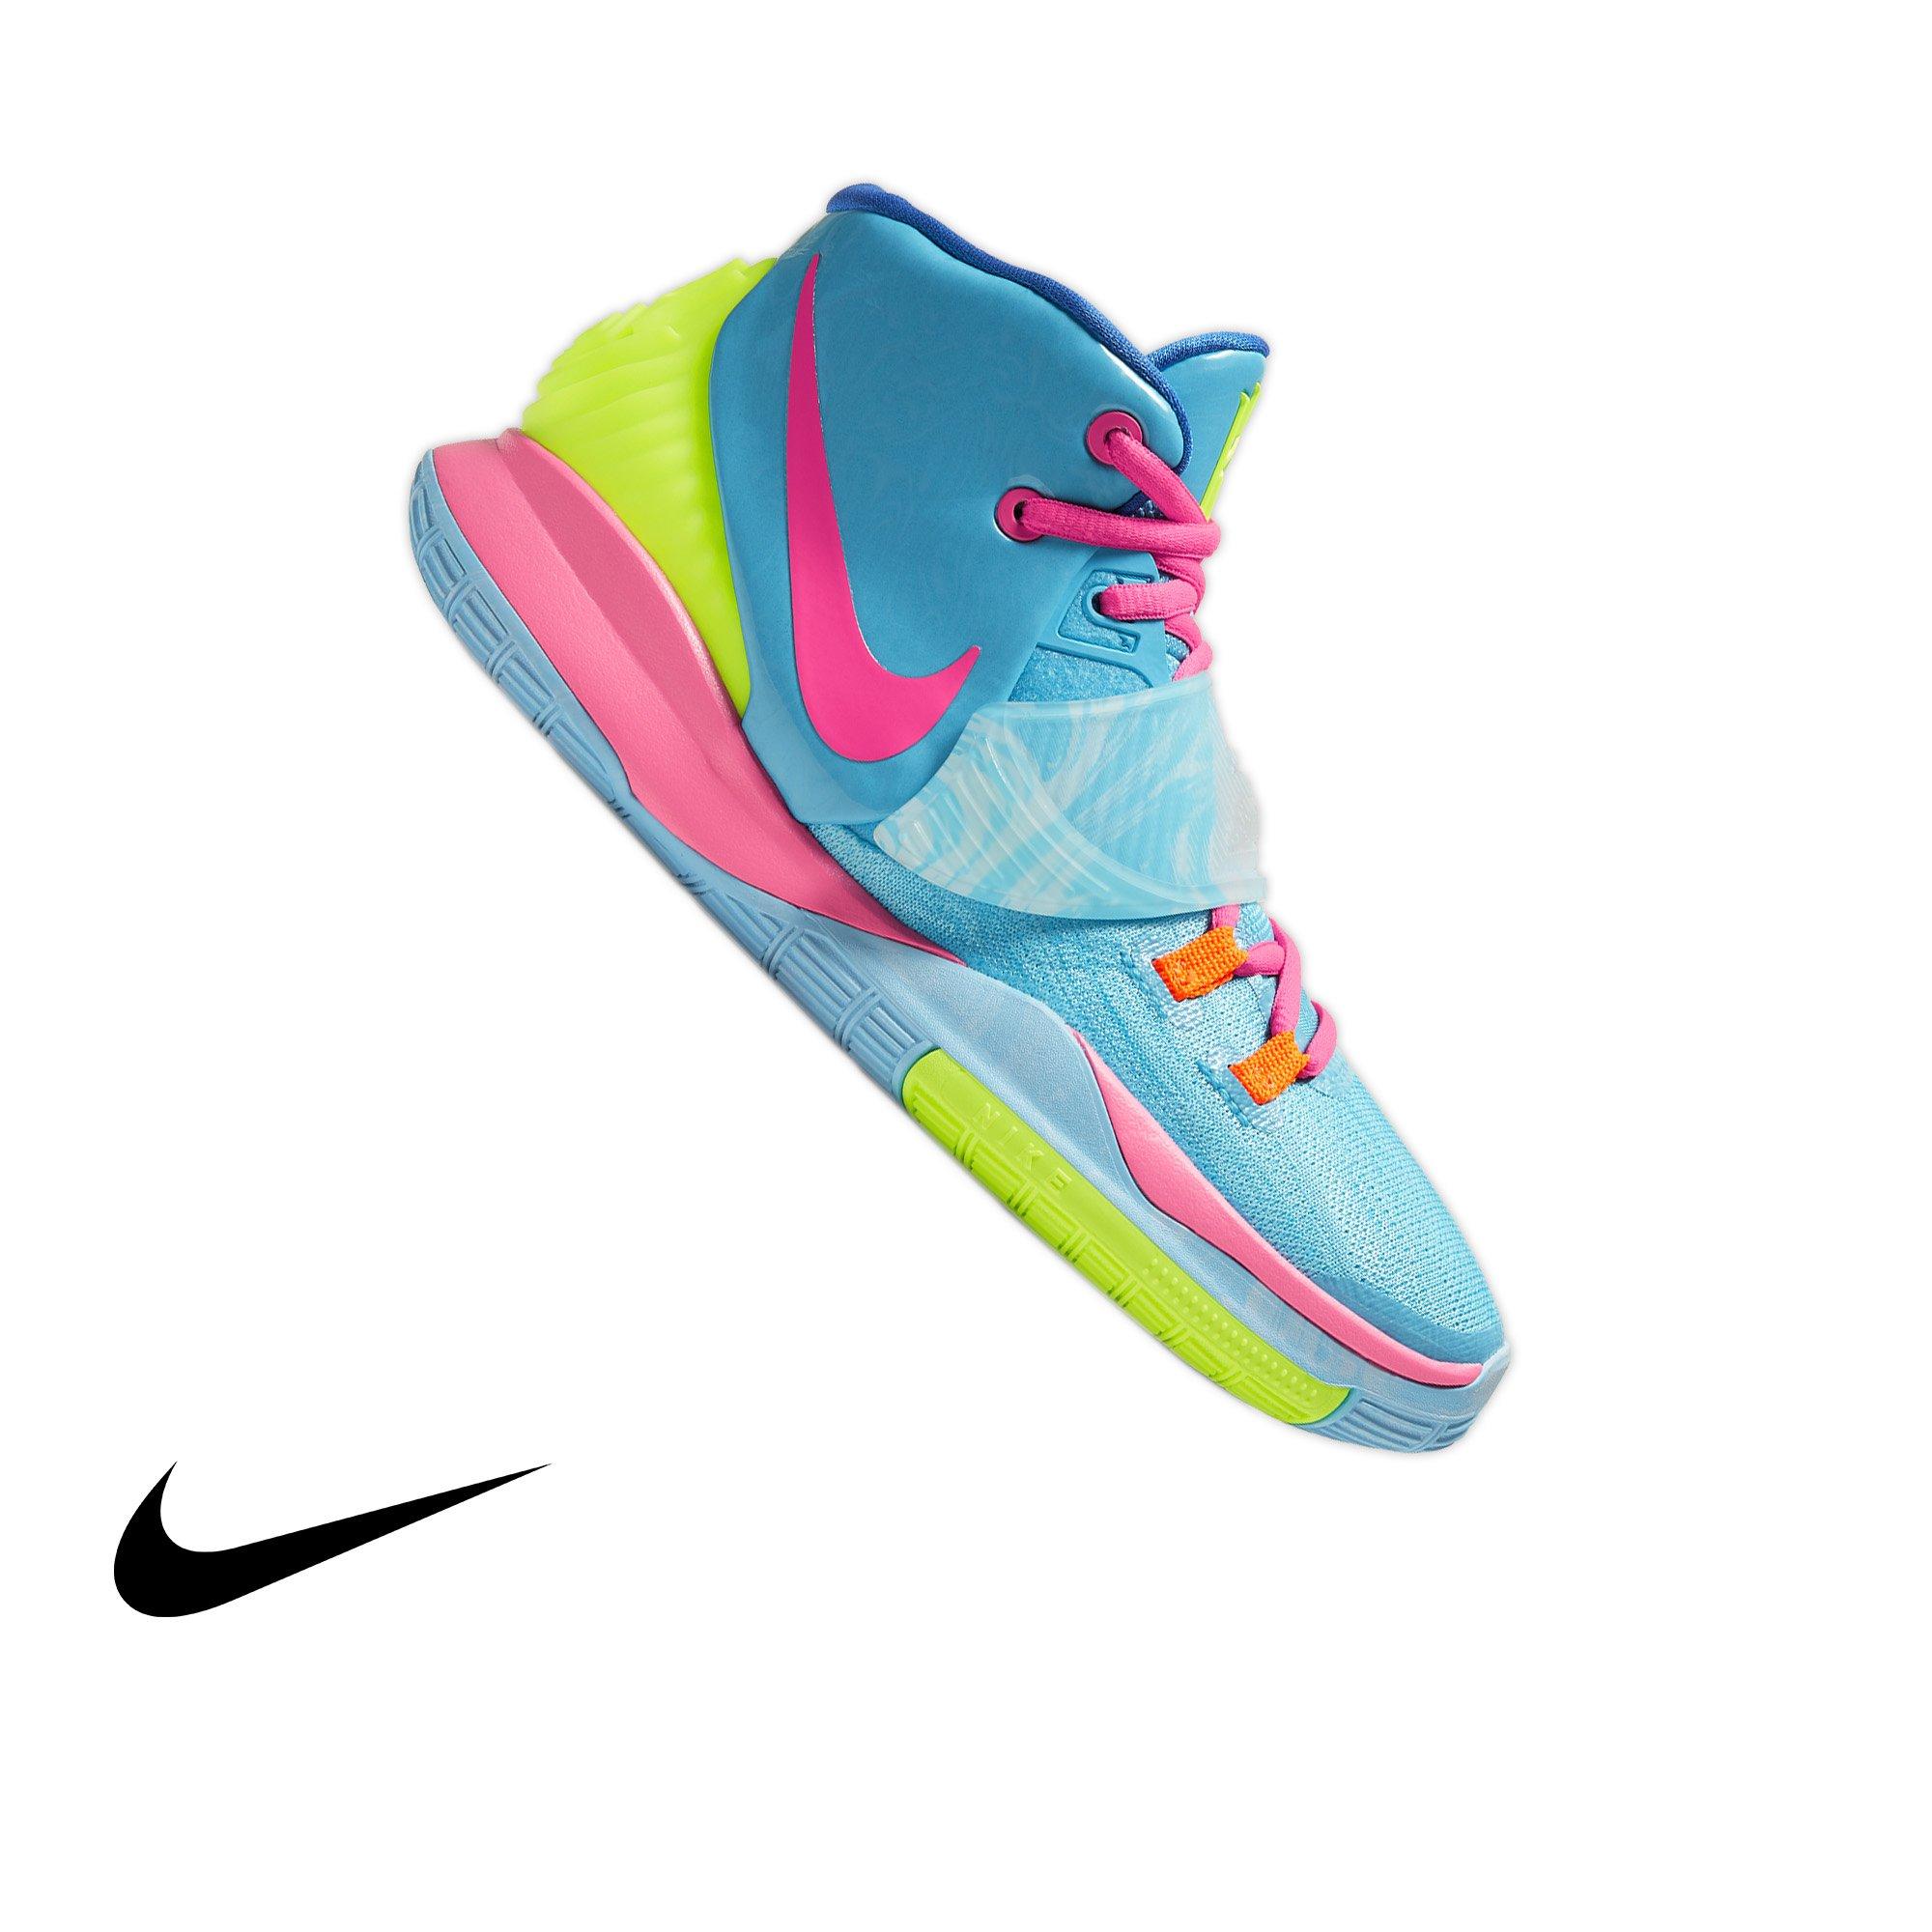 Sepatu Basket Nike Kyrie 6 Shanghai Premium Original